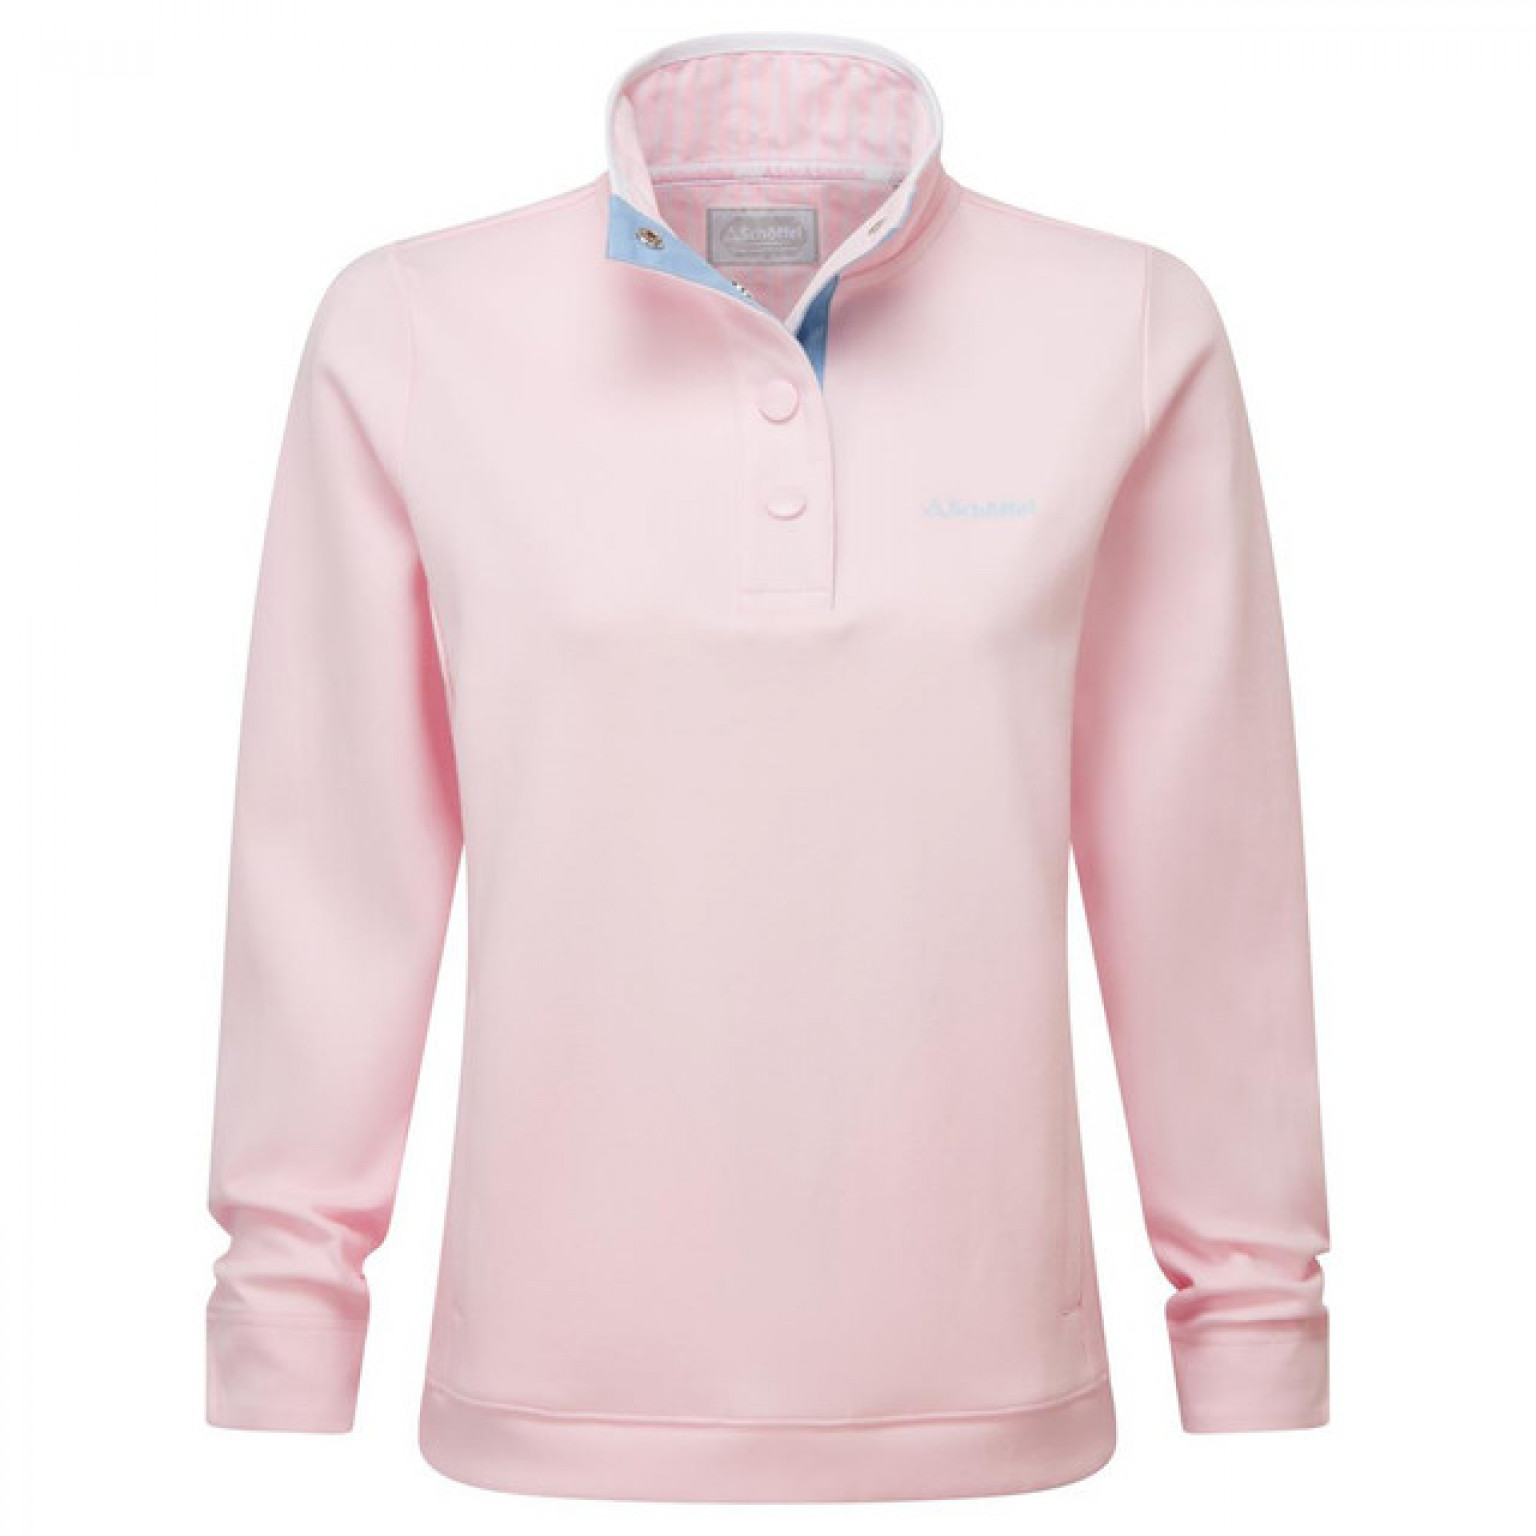 Schoffel Steephill Cove Sweatshirt Pale Pink